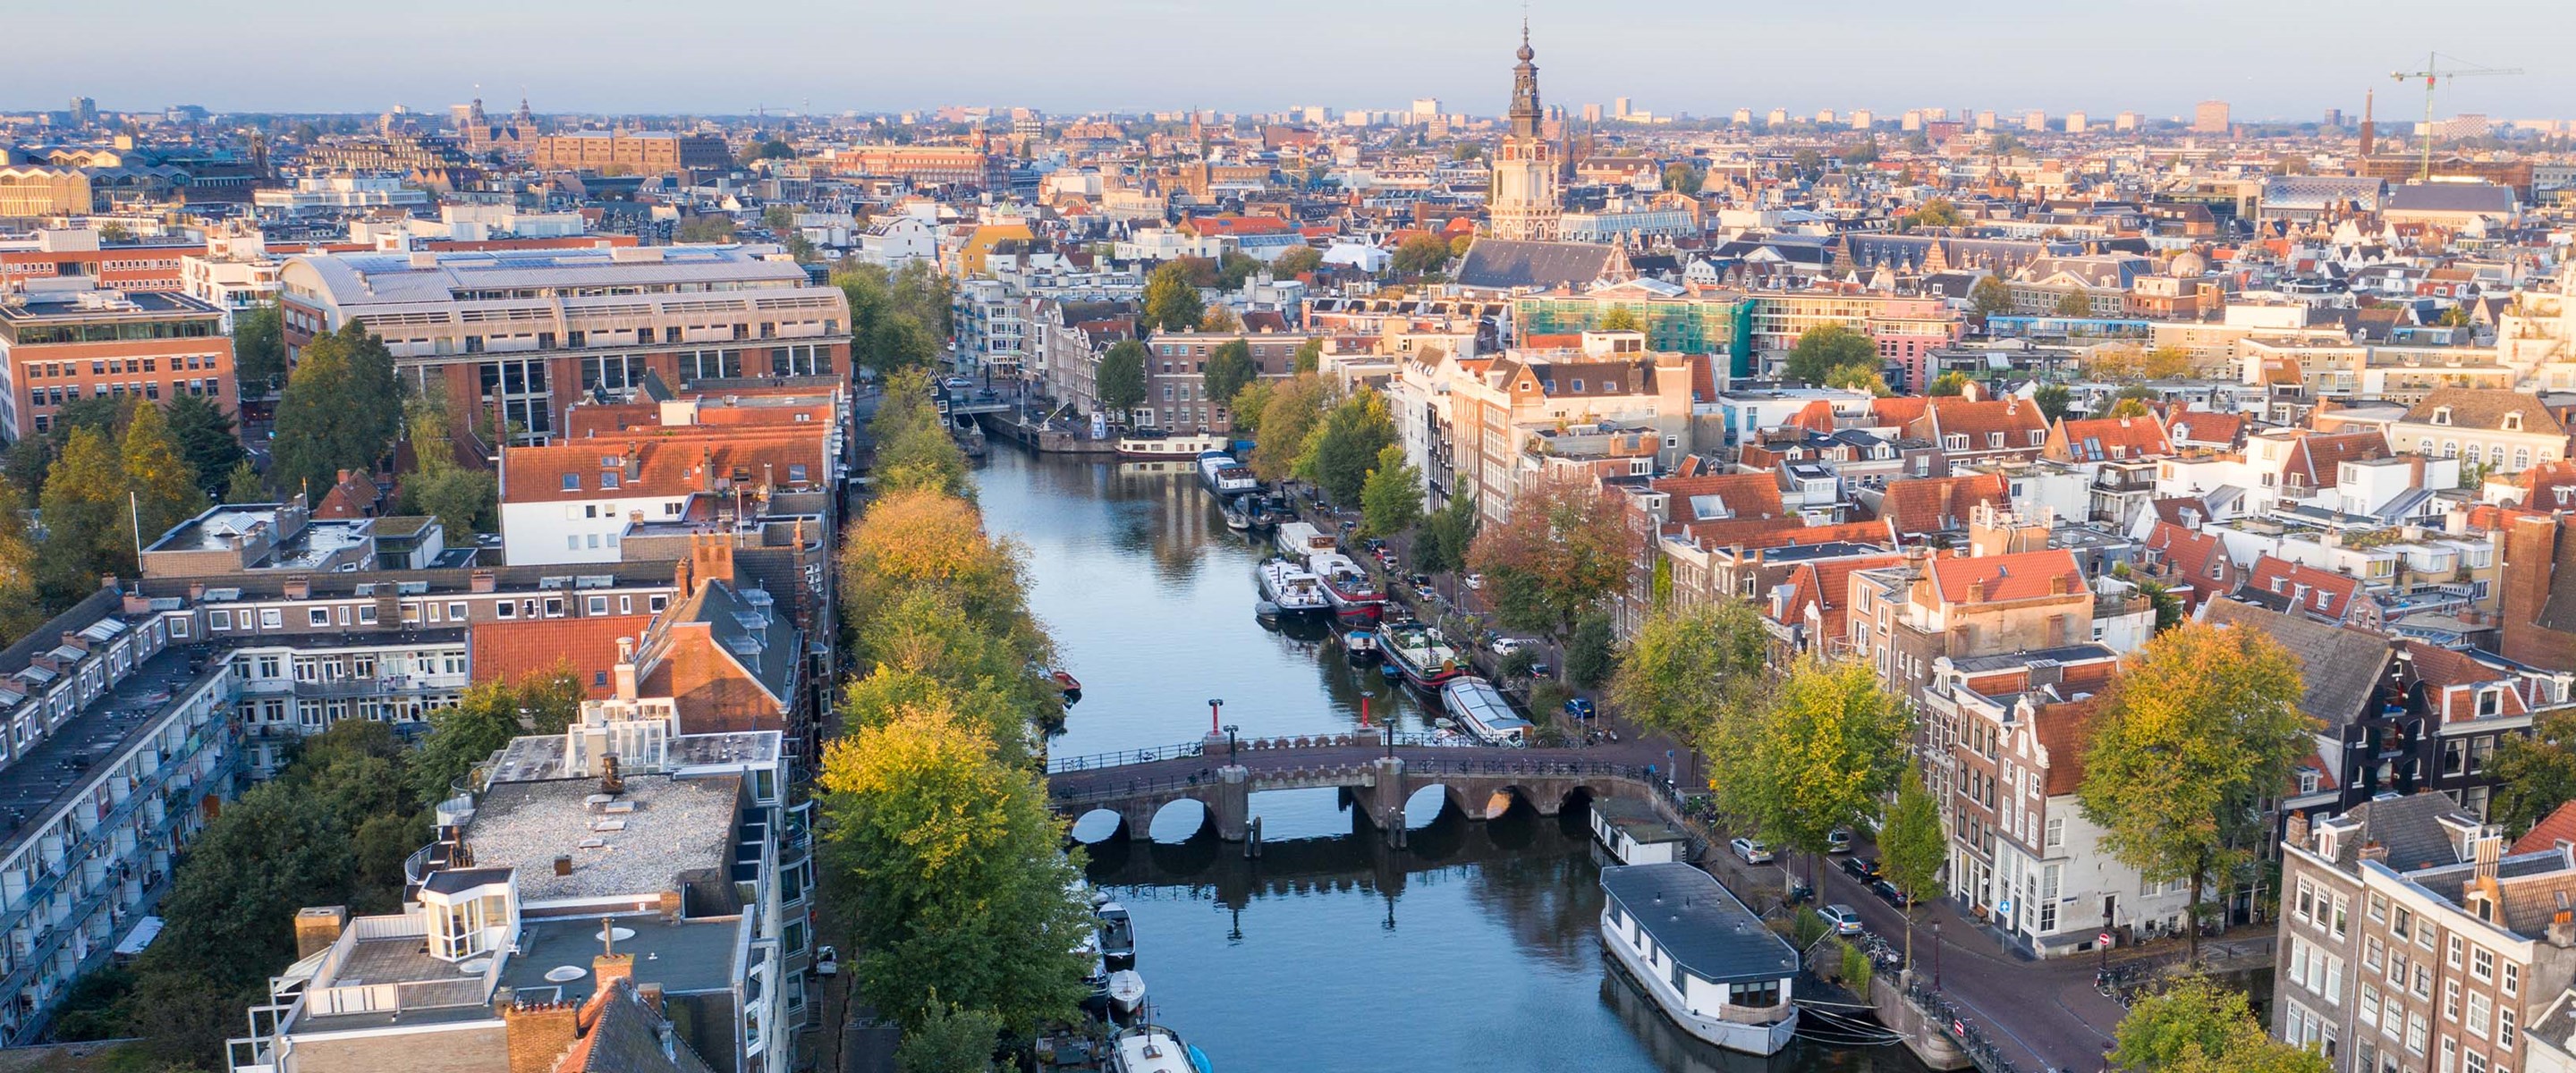 Amsterdam aerial view